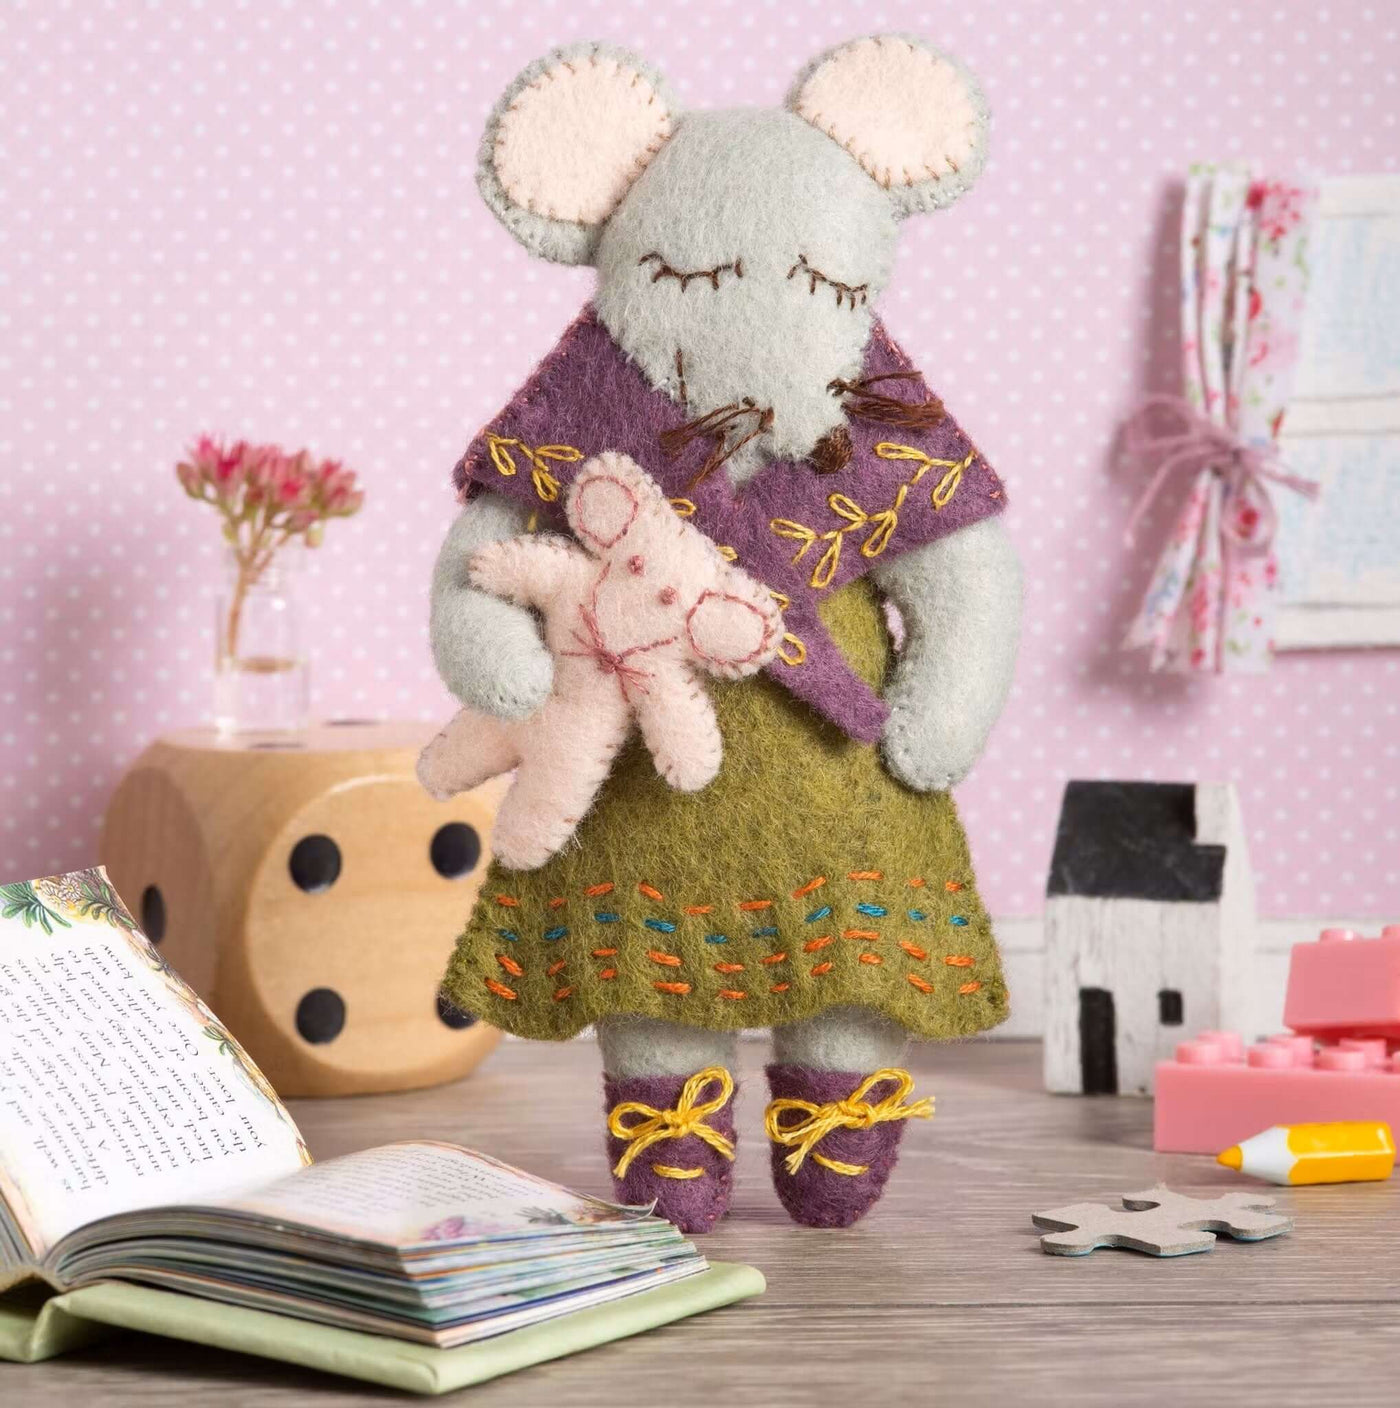 Adorable DIY Animal character felt craft kit, Corinne Lapierre. Made in UK.